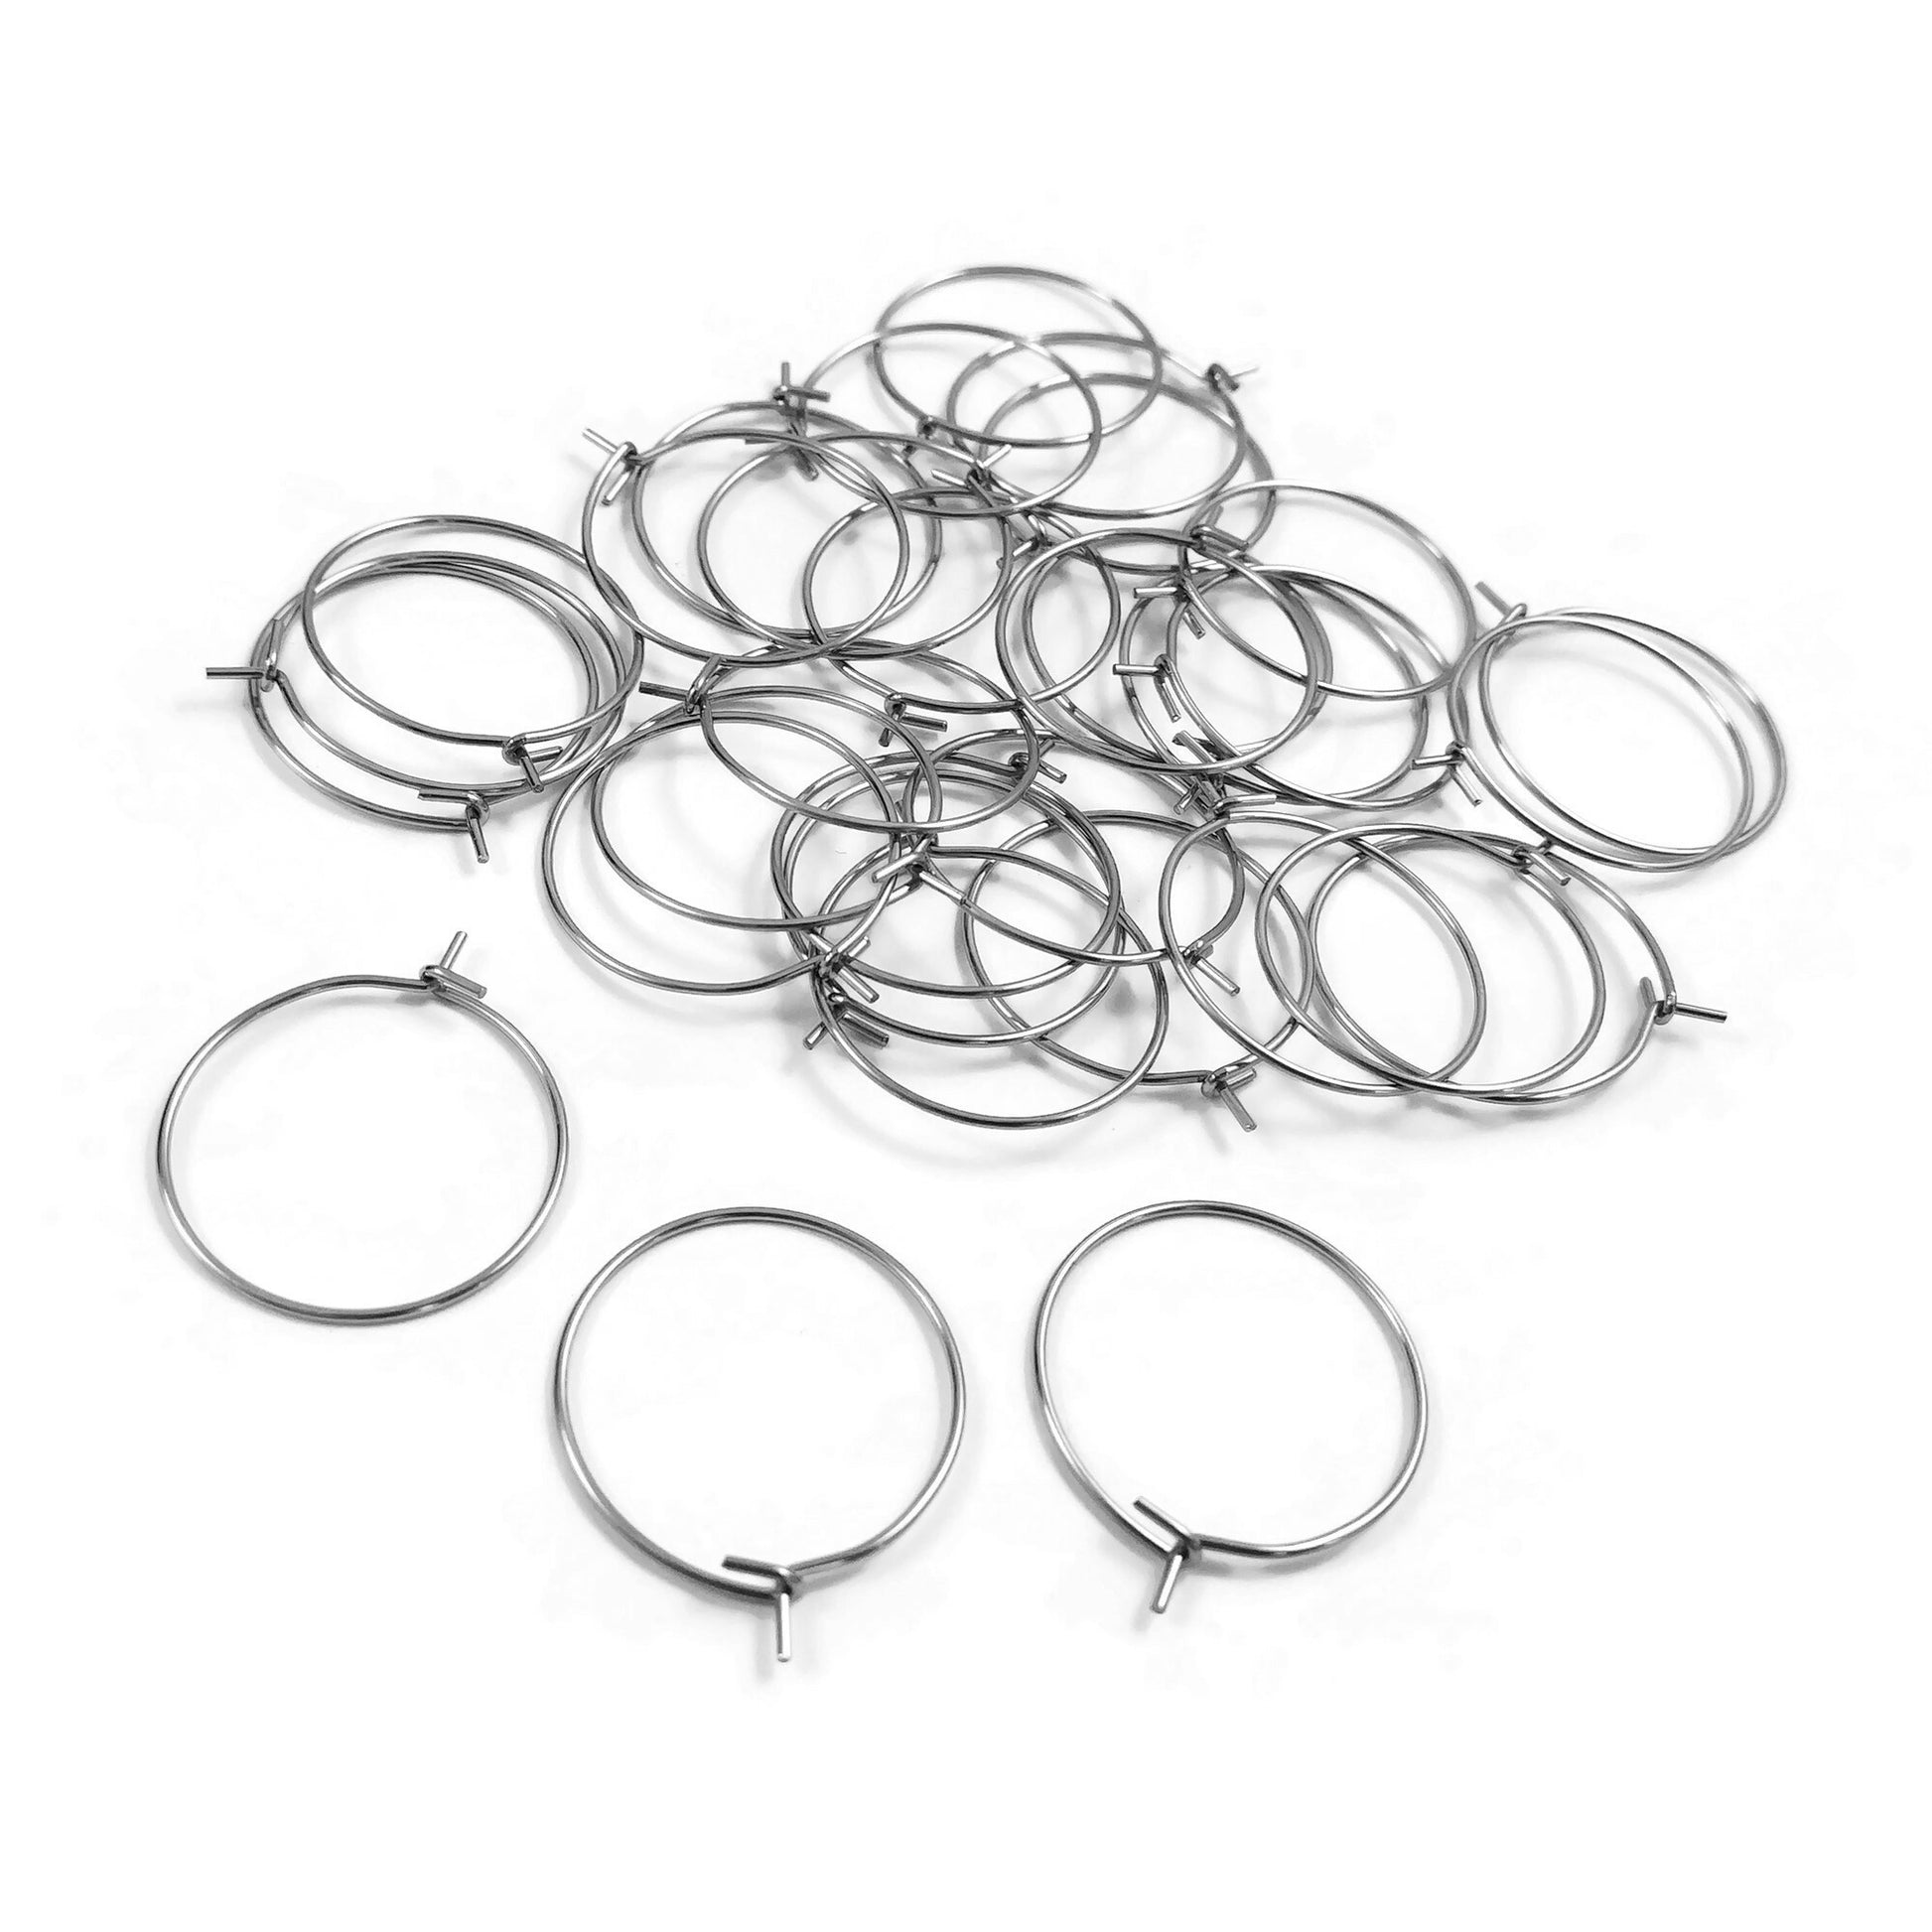 30 anneaux en acier inoxydable chirurgical